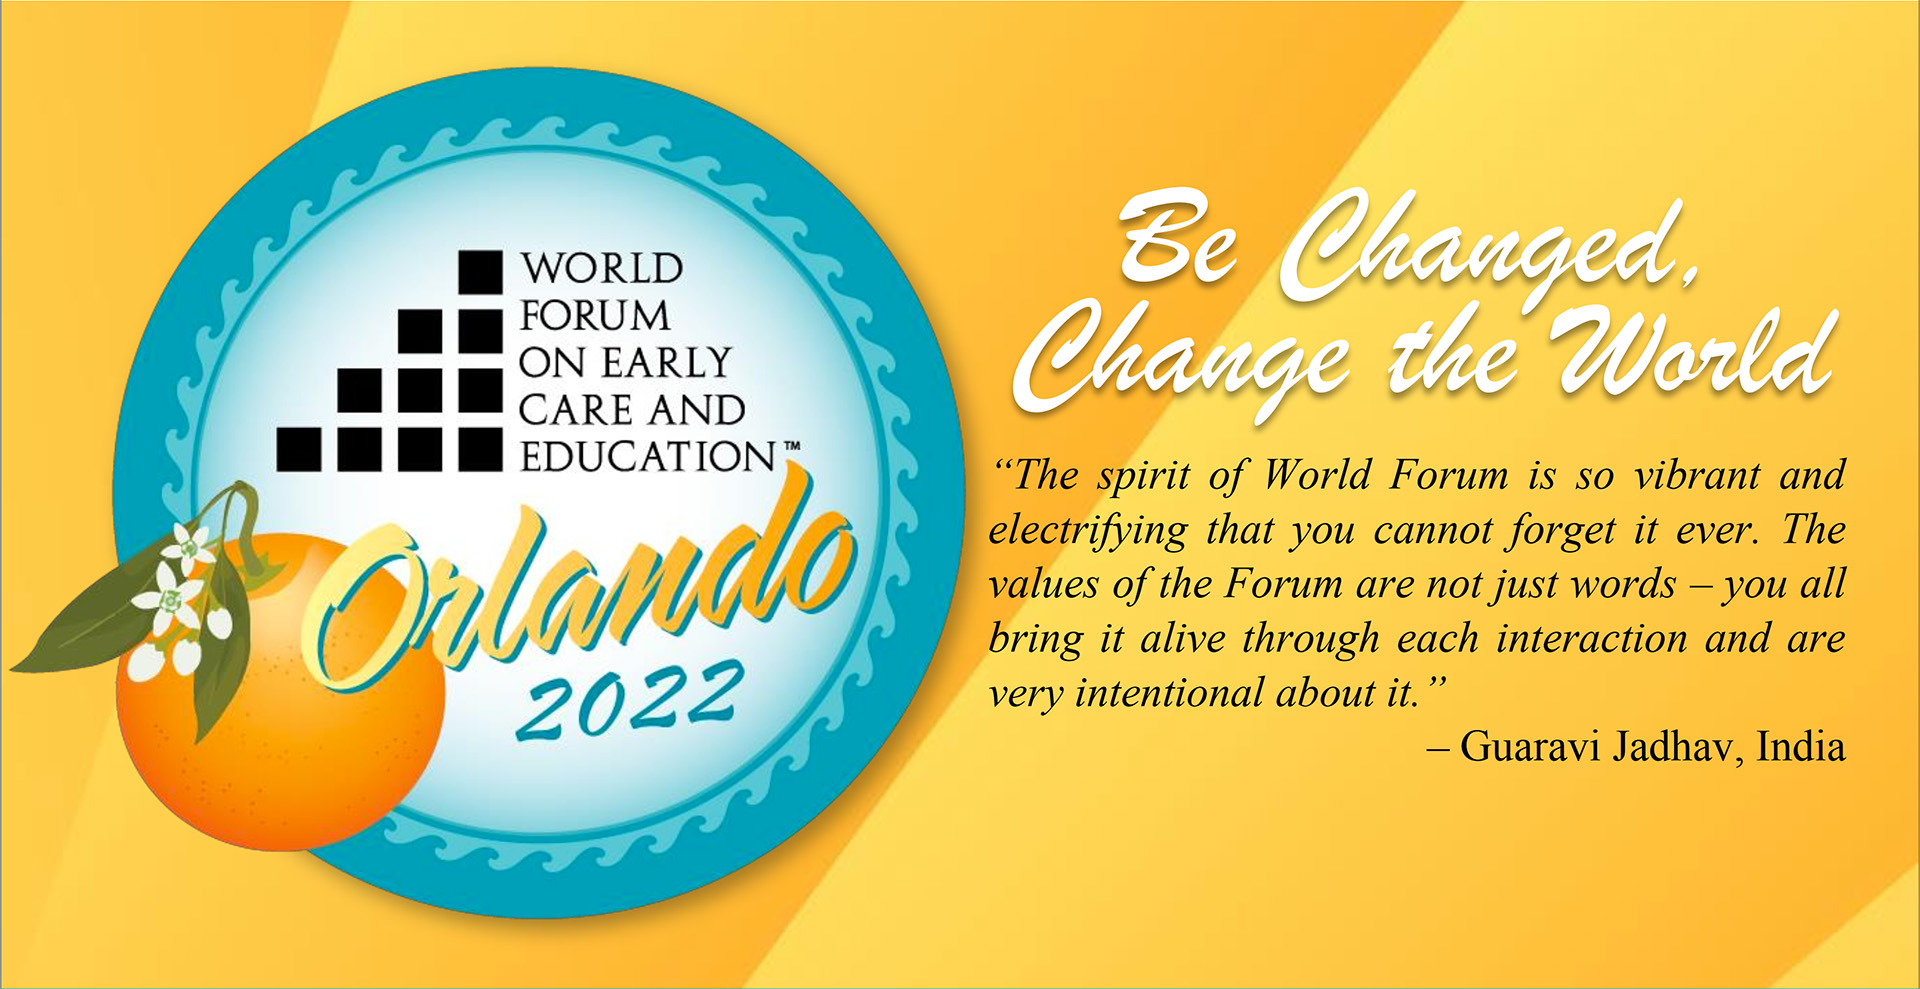 World Forum Foundation